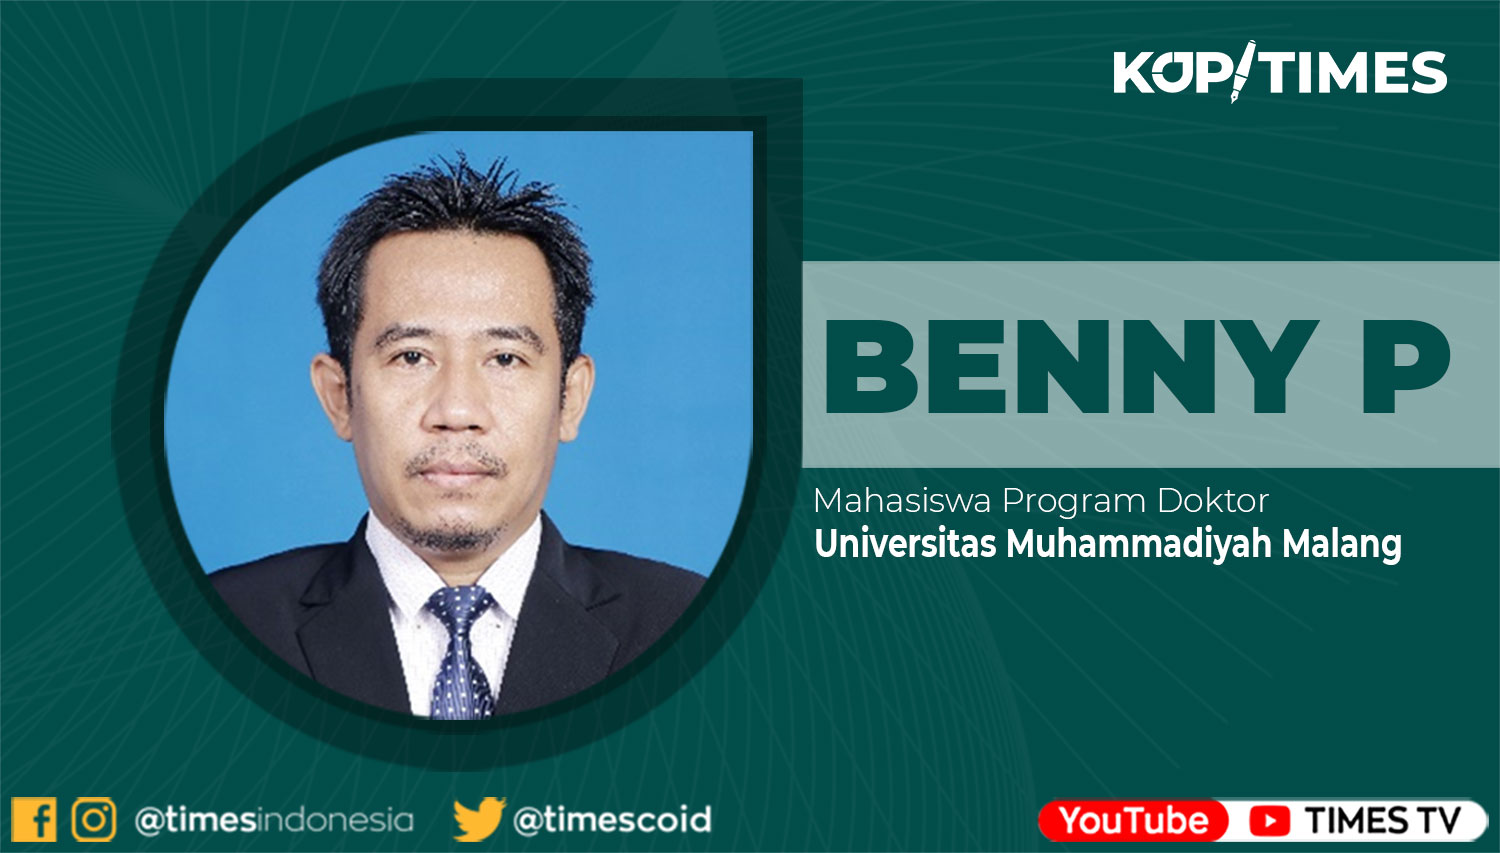 Benny P, Mahasiswa Program Doktor di Universitas Muhammadiyah Malang